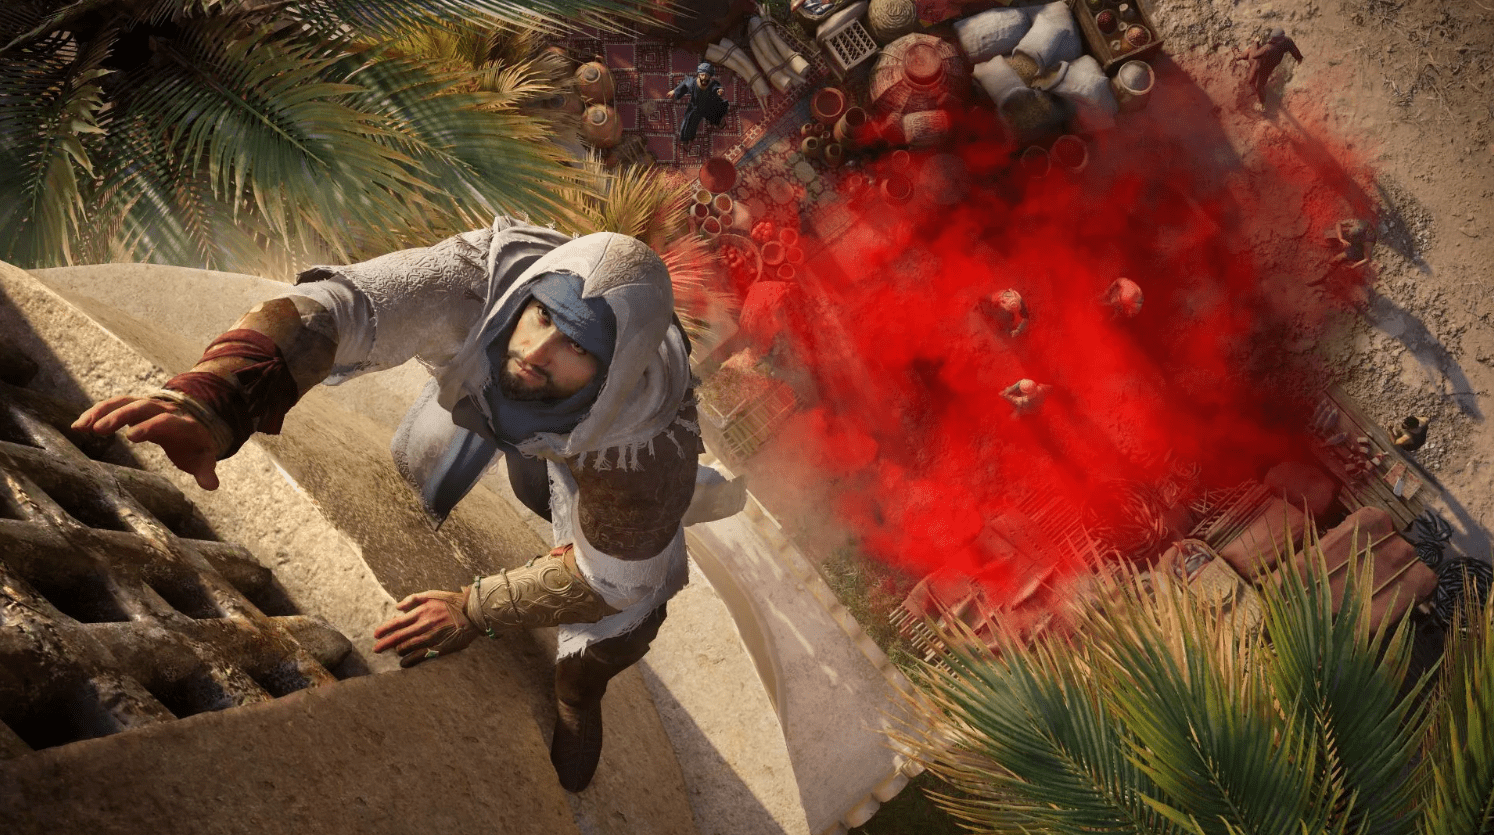 Assassin's Creed Valhalla: Guia completo : Requisitos para rodar no PC